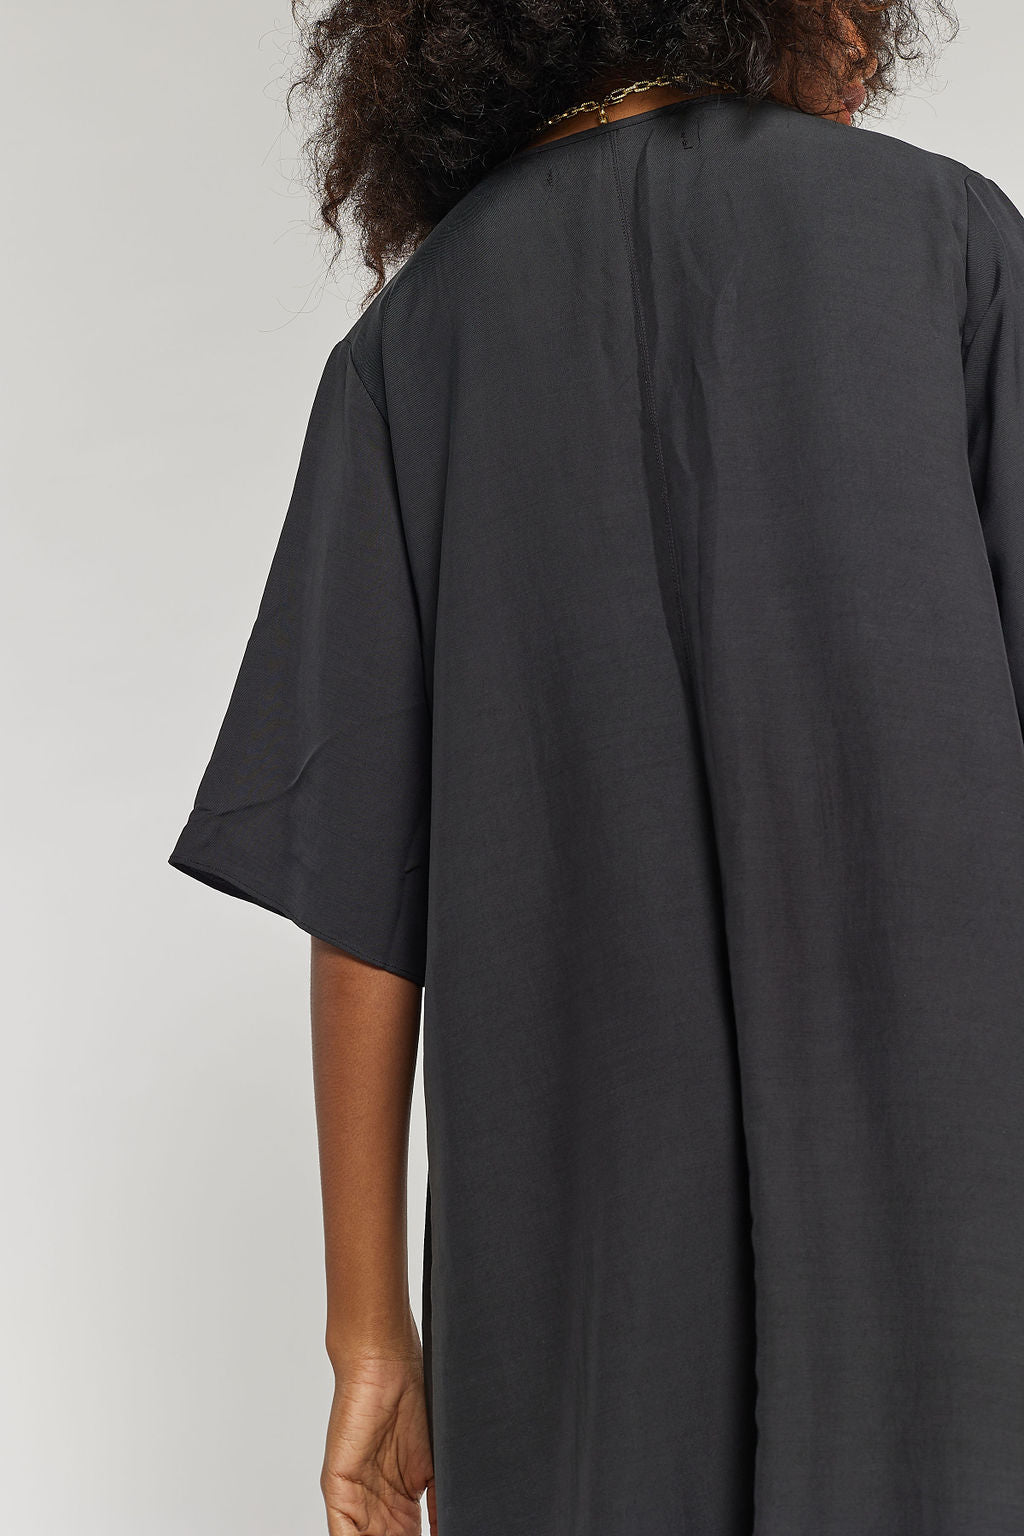 KEY WEST Black Midi Dress - close up